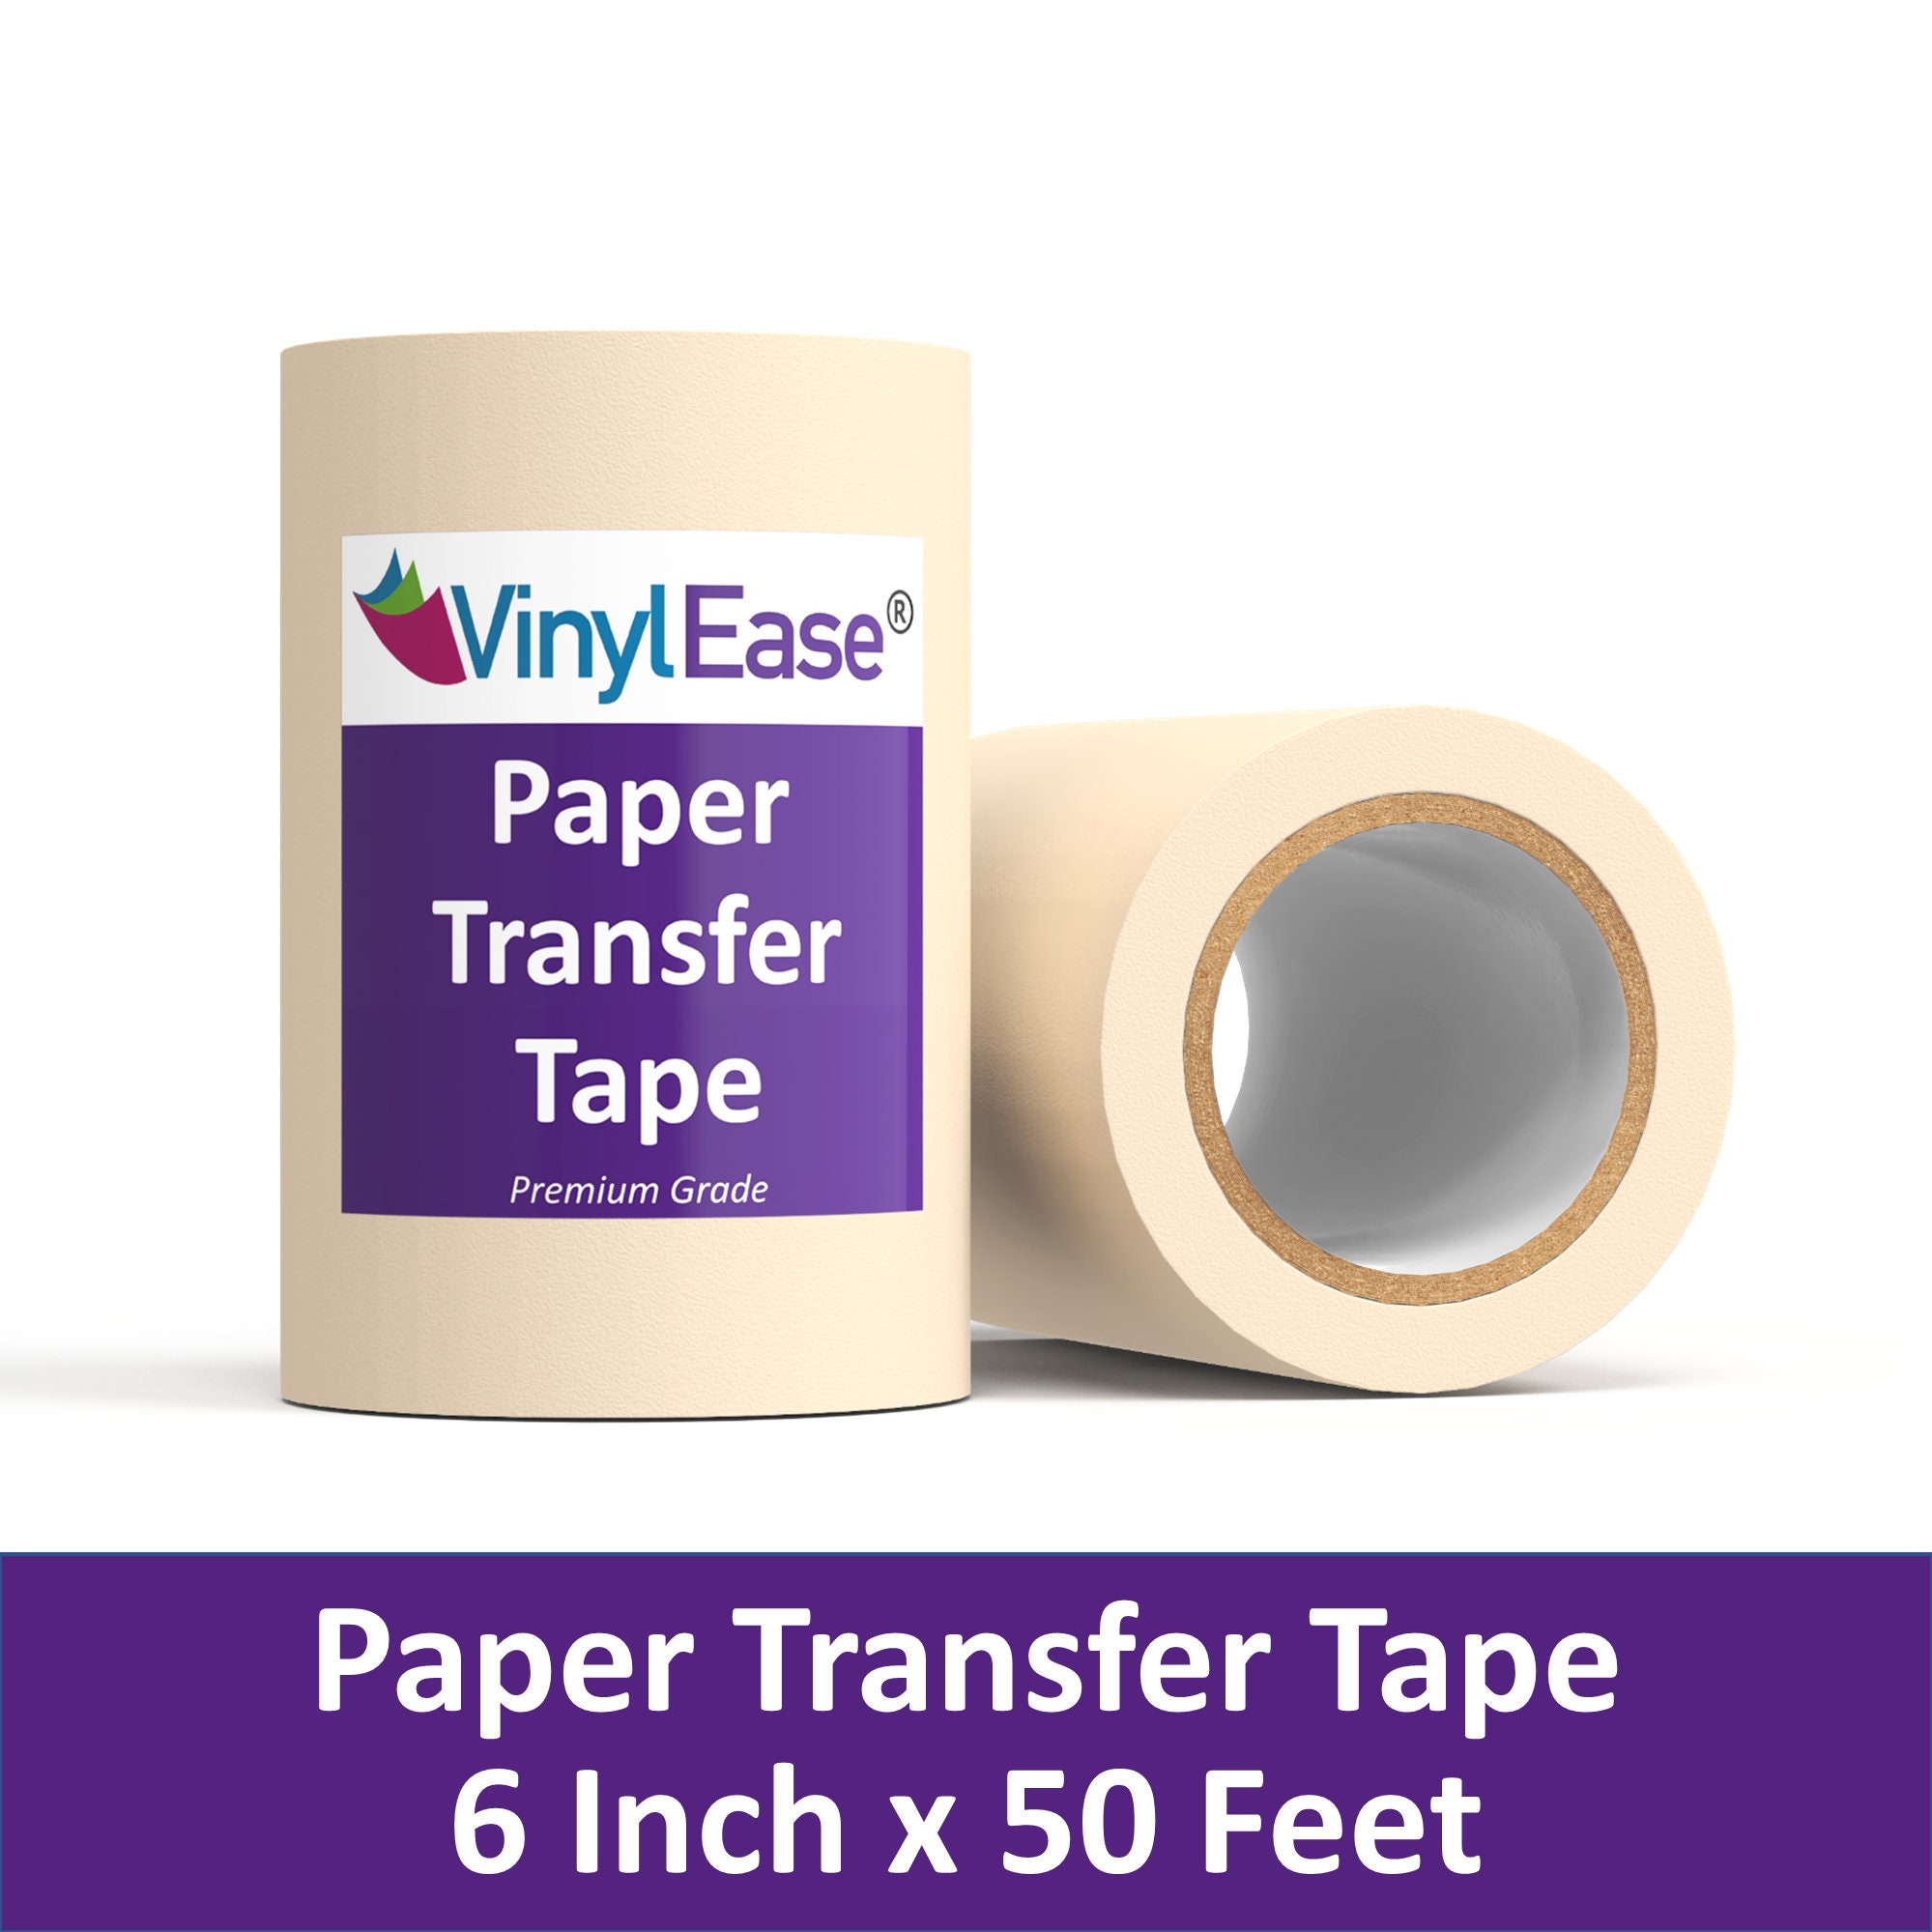 12 x 100' Roll of Paper Transfer Tape for Vinyl, Made in America, Premium-Grade Transfer Paper for Vinyl with Layflat Adhesive for Cricut Vinyl